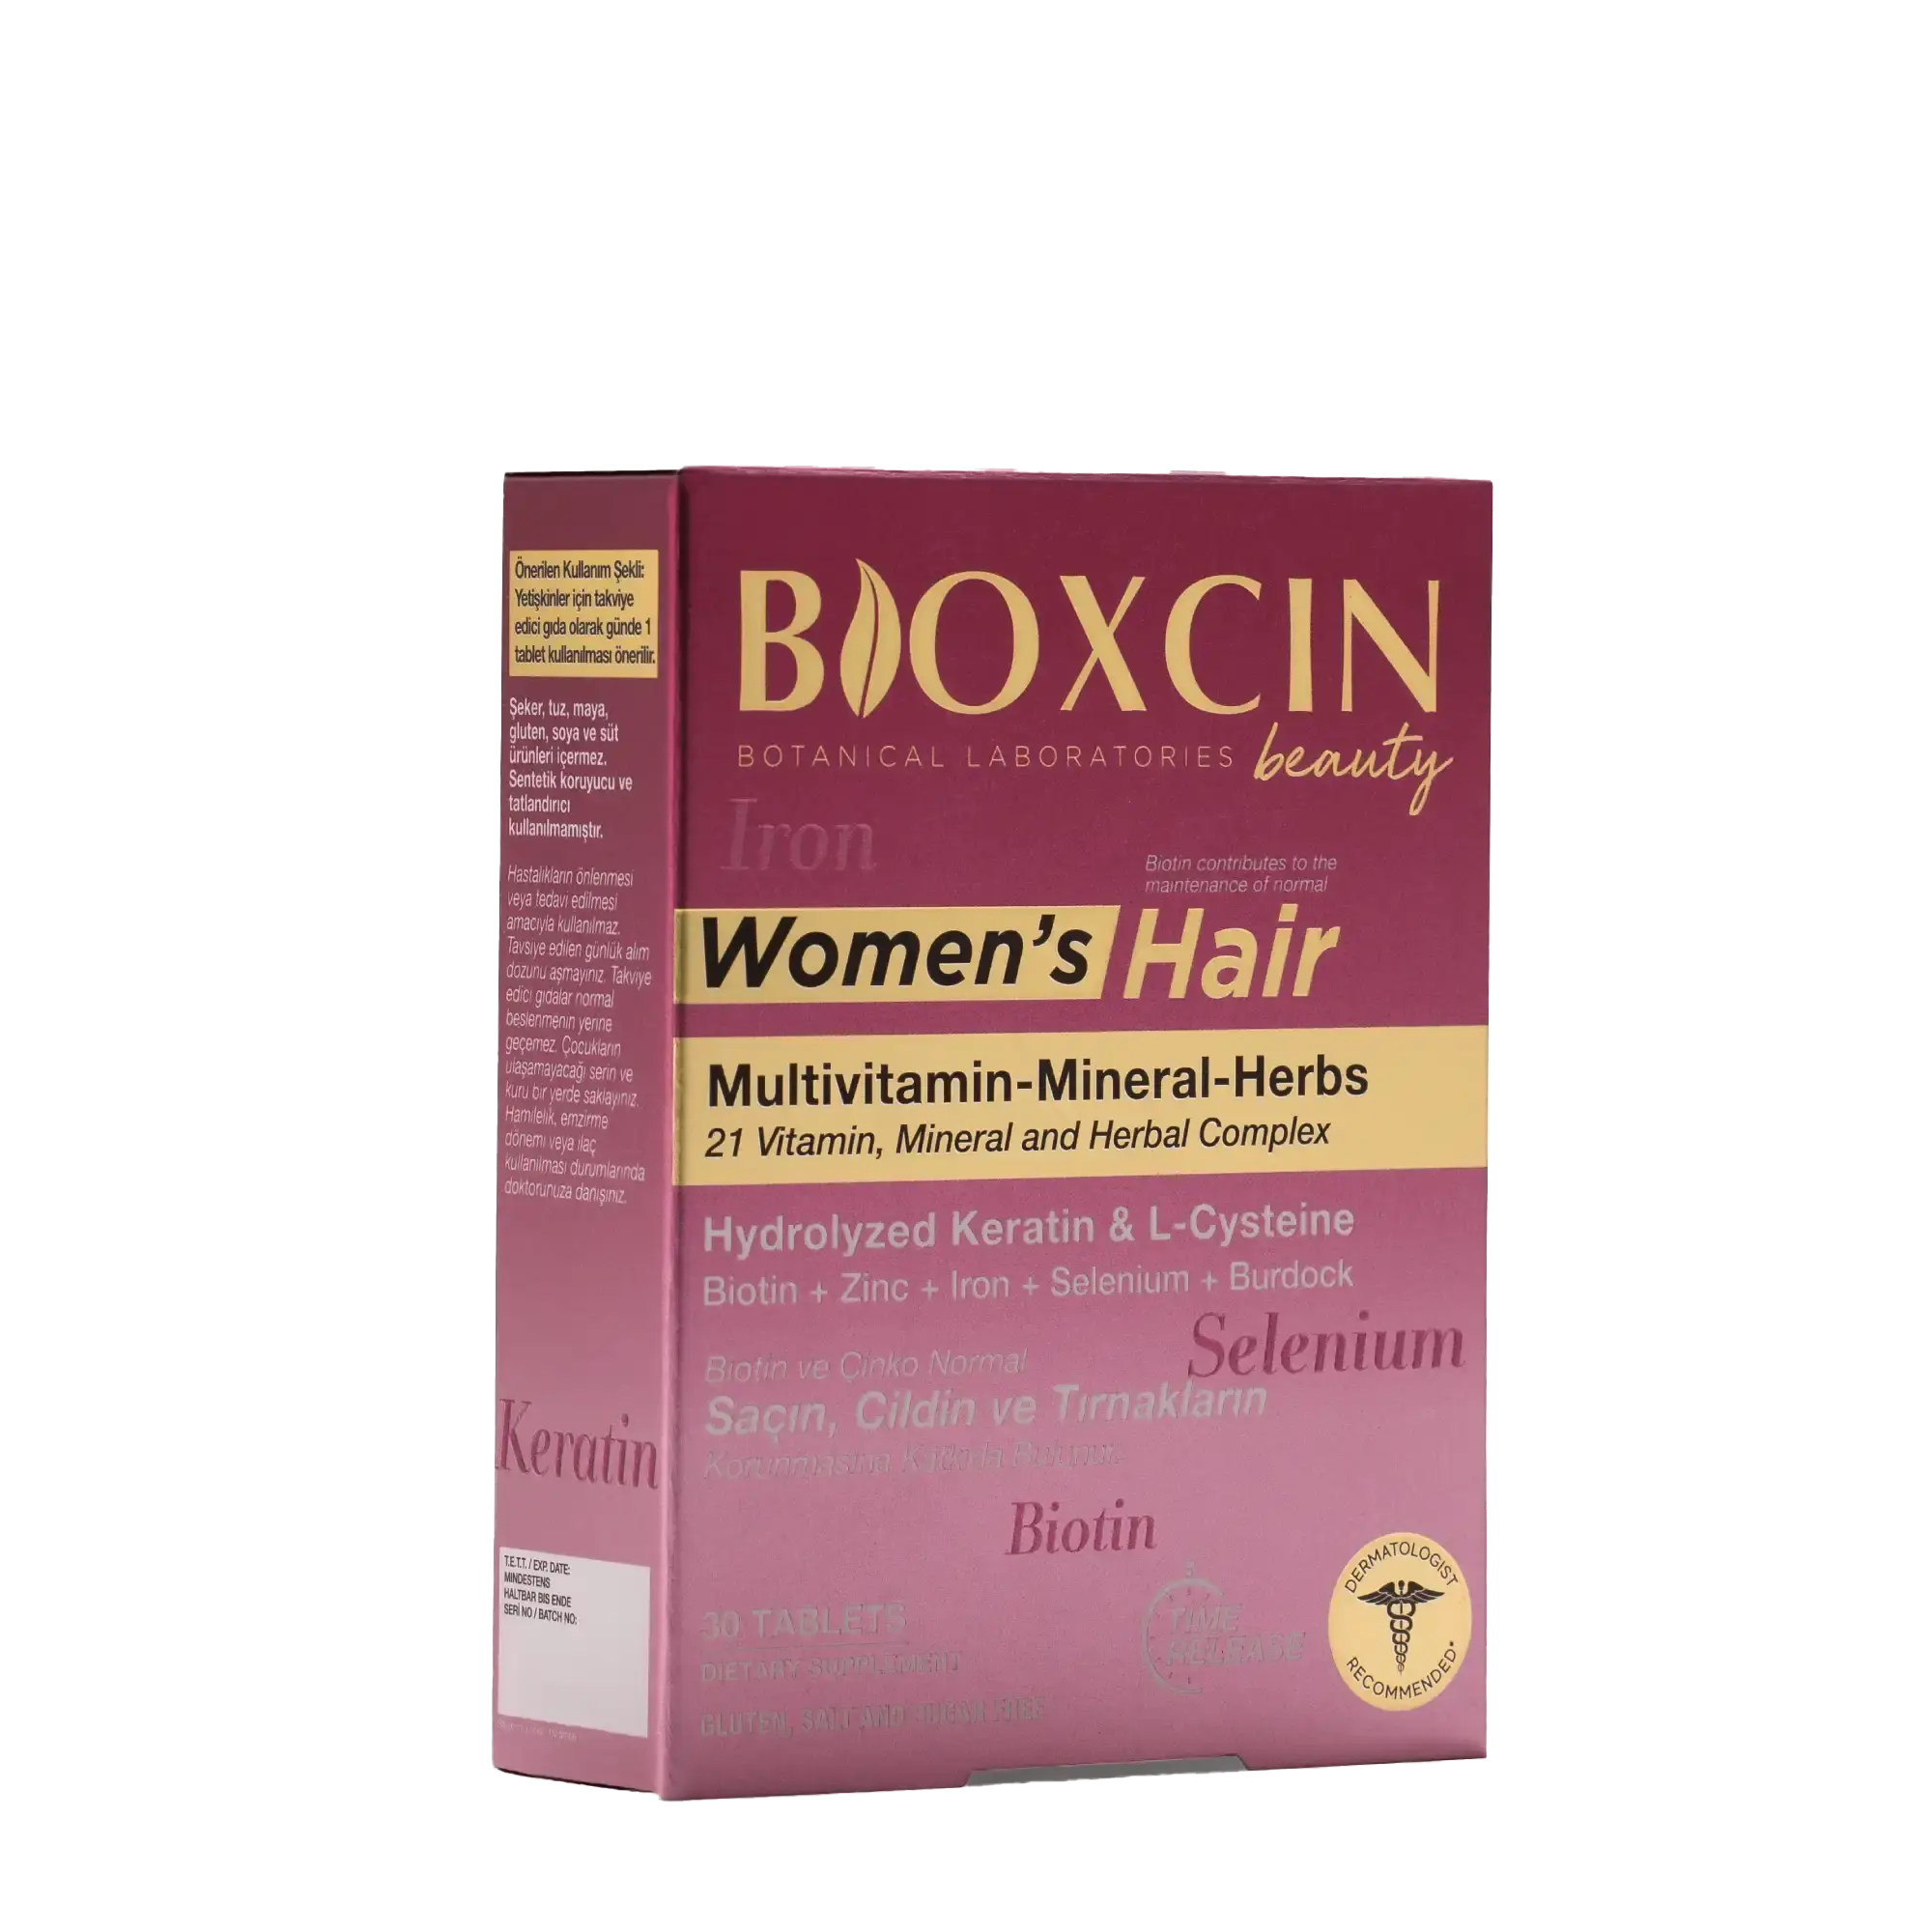 B'oxcin Women's Hair Tablet